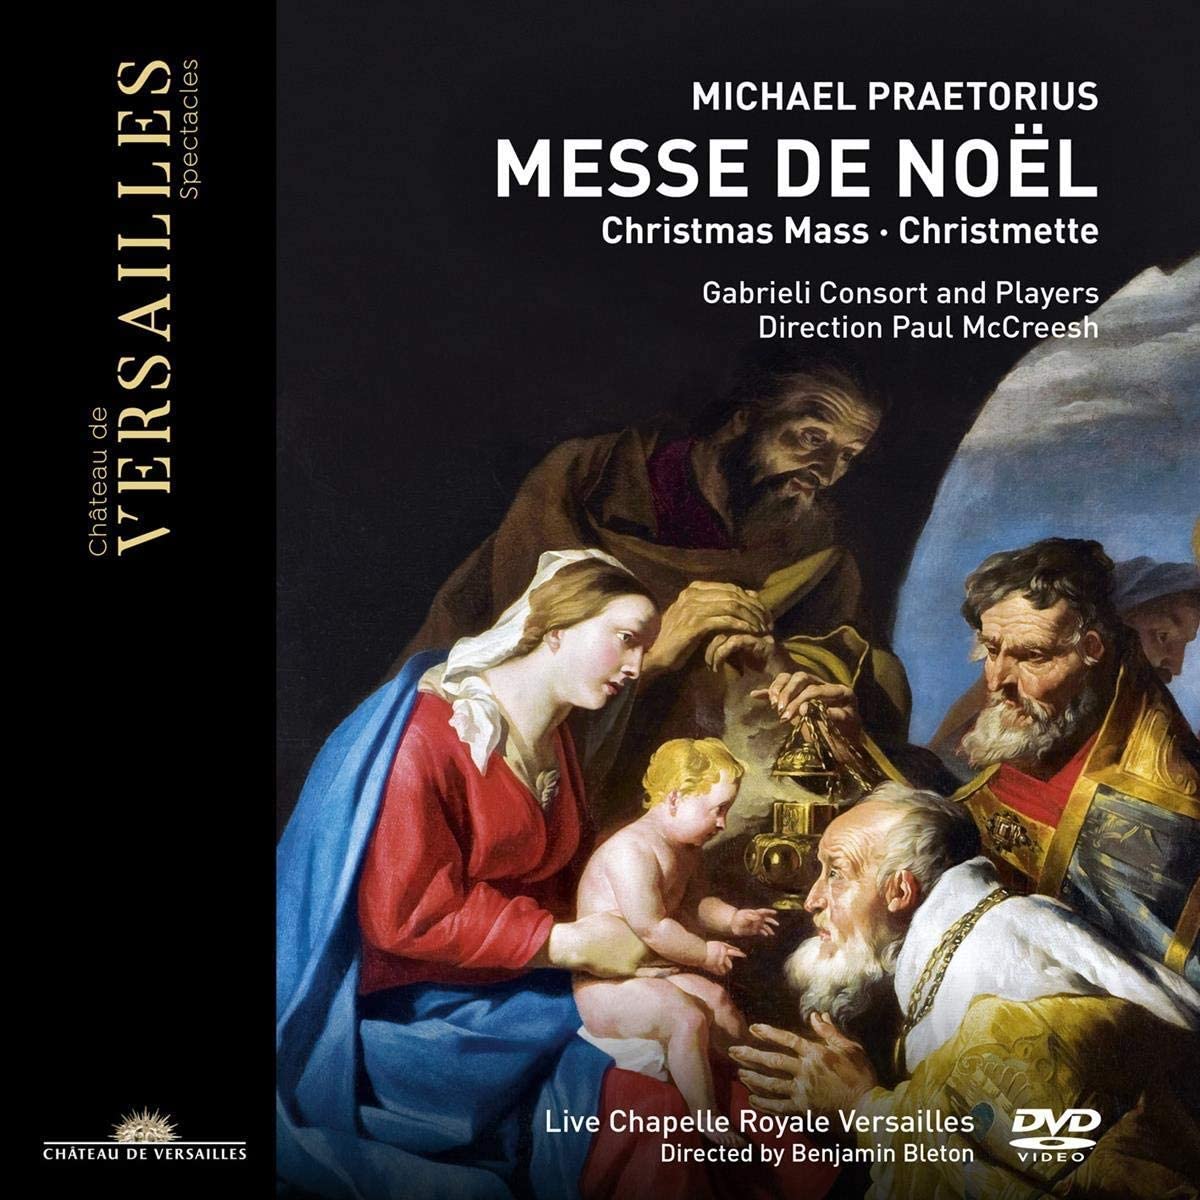 Michael Praetorius: Messe de Noel | Gabrieli Consort and Players, Paul McCreesh